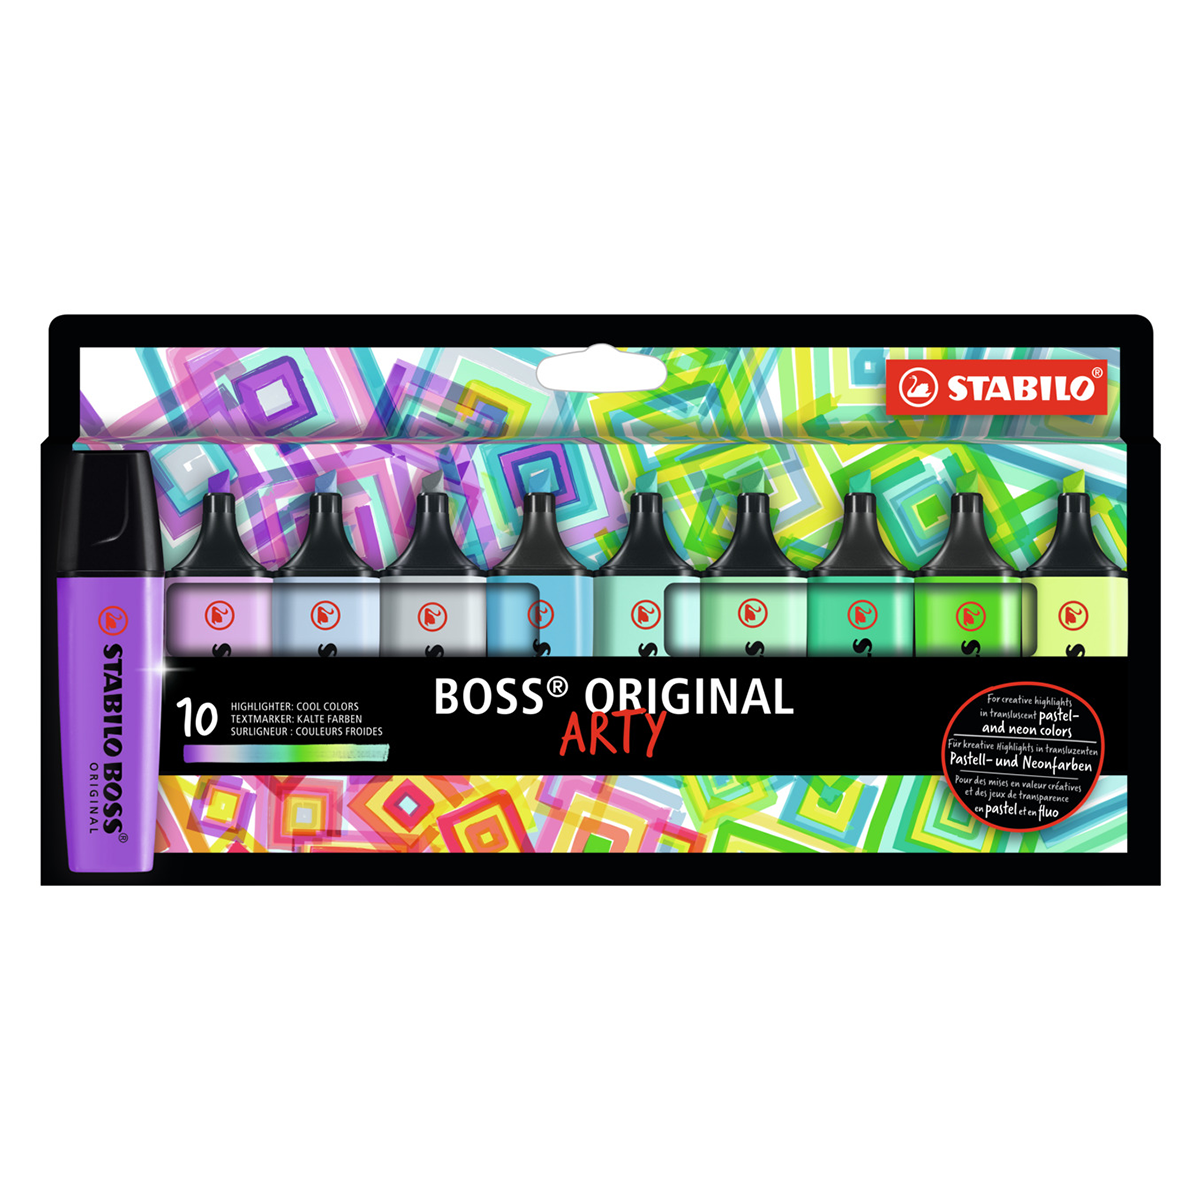 Highlighter - STABILO BOSS Original Arty - Deskset of 23 - Assorted Colors